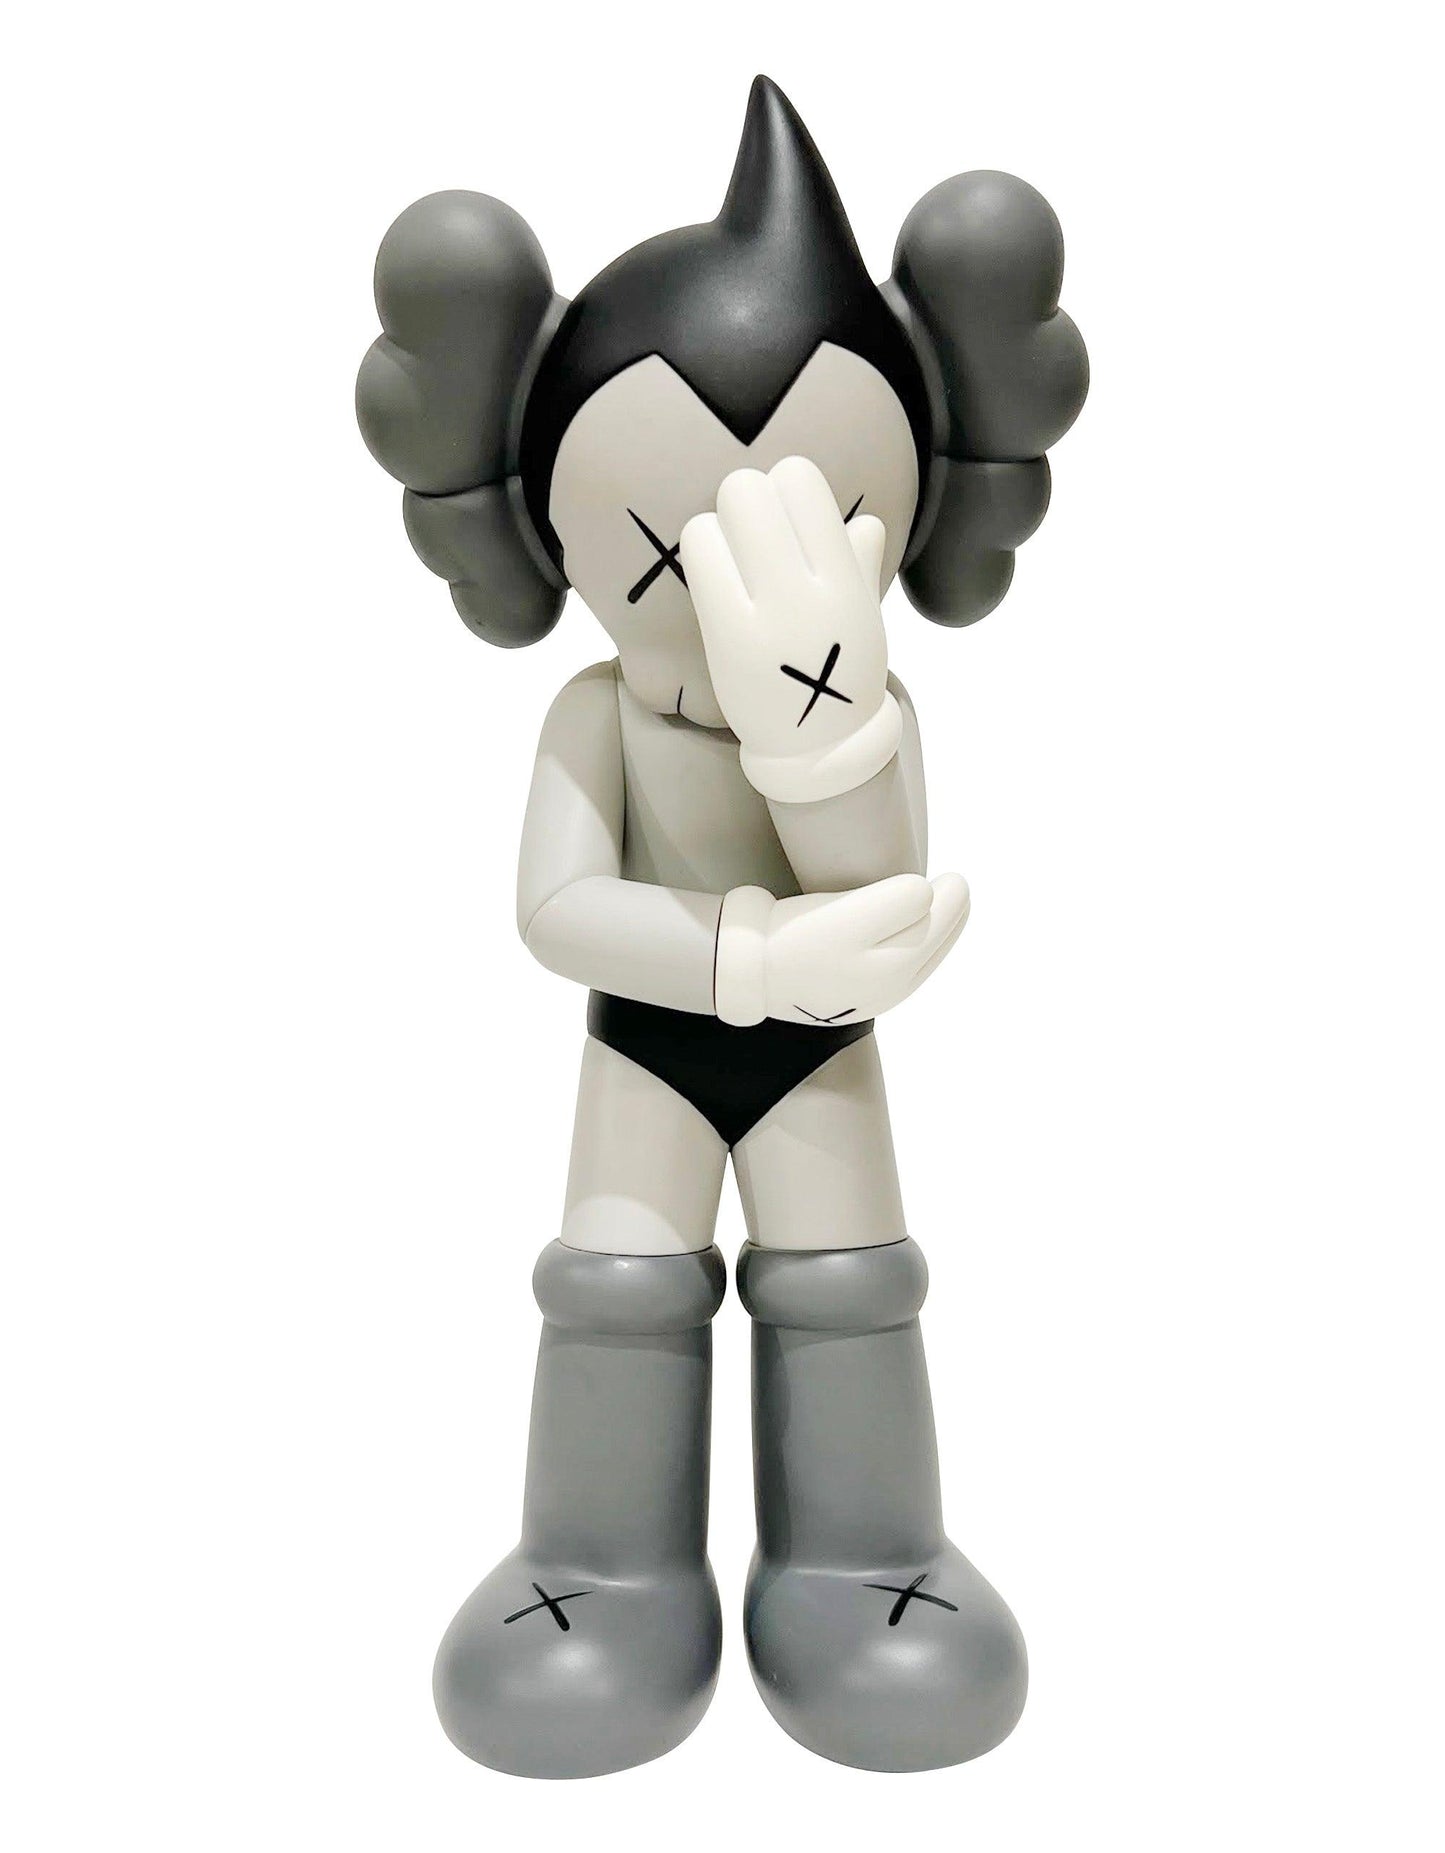 Pop Art Fusion - PopArtFusion - KAWS KAWS - Astro Boy Mono, 2013 popartfusion.com by Conectid